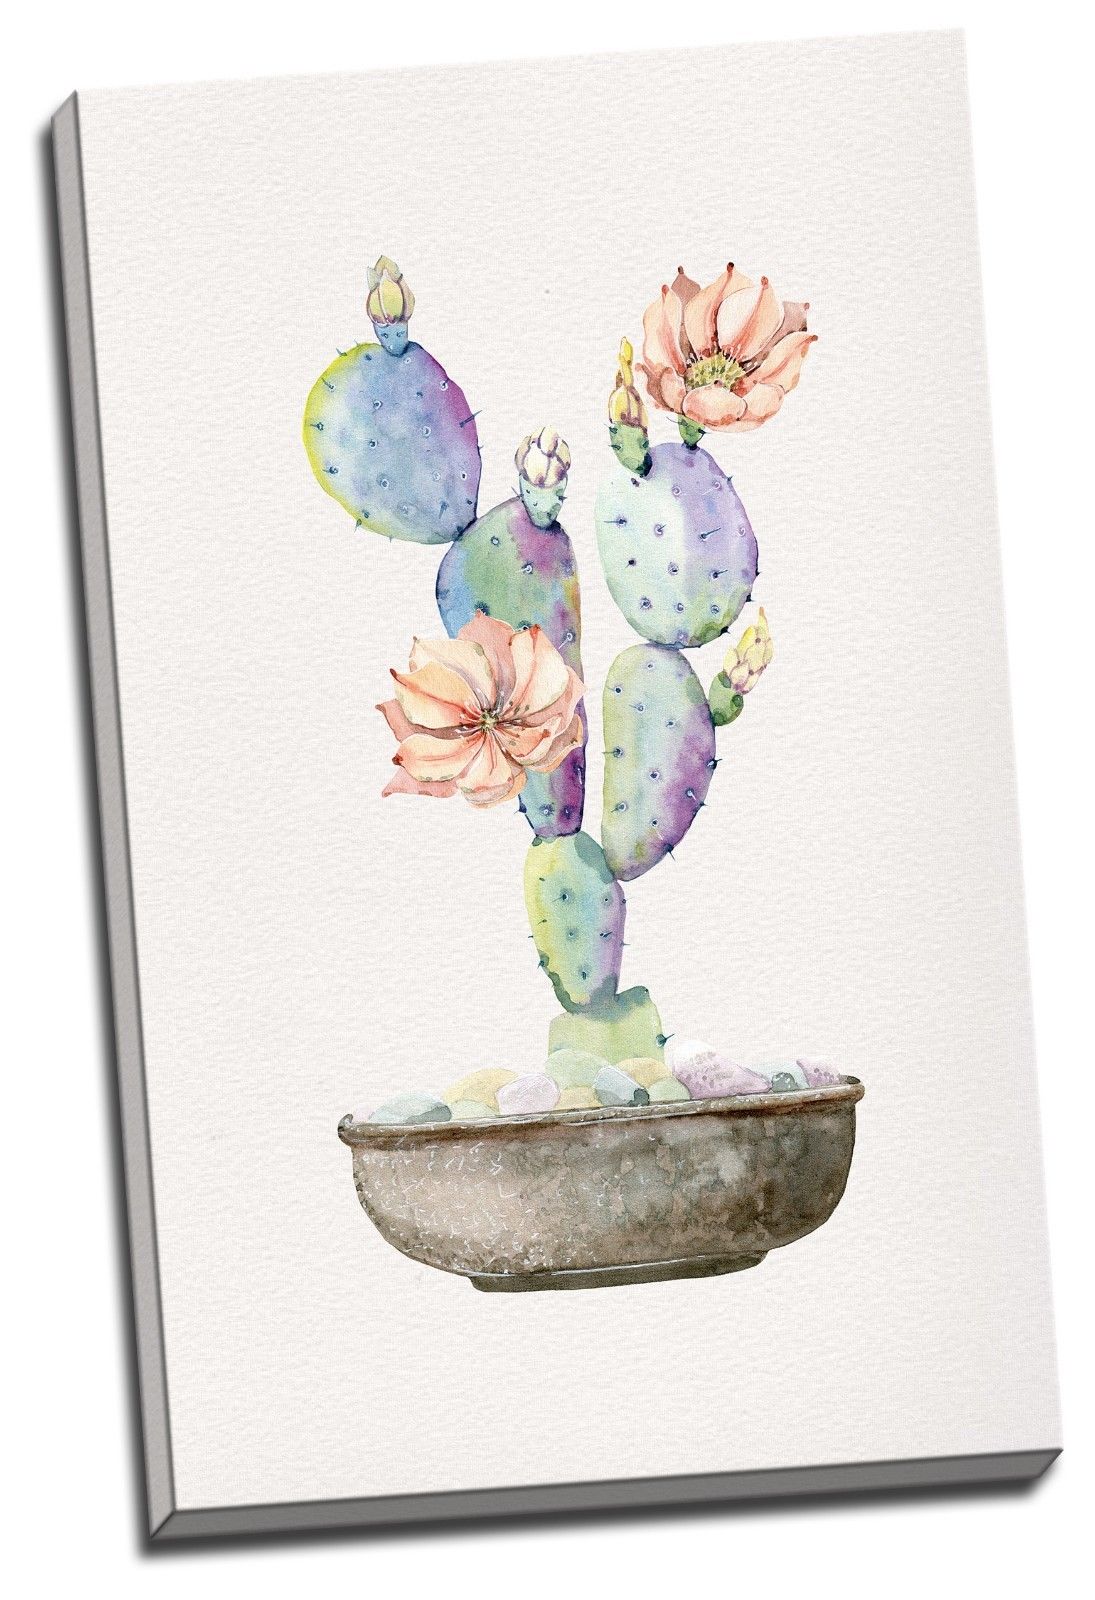 Cactus Flower Watercolour Framed Canvas Prints Modern Wall Art Home Decor Print